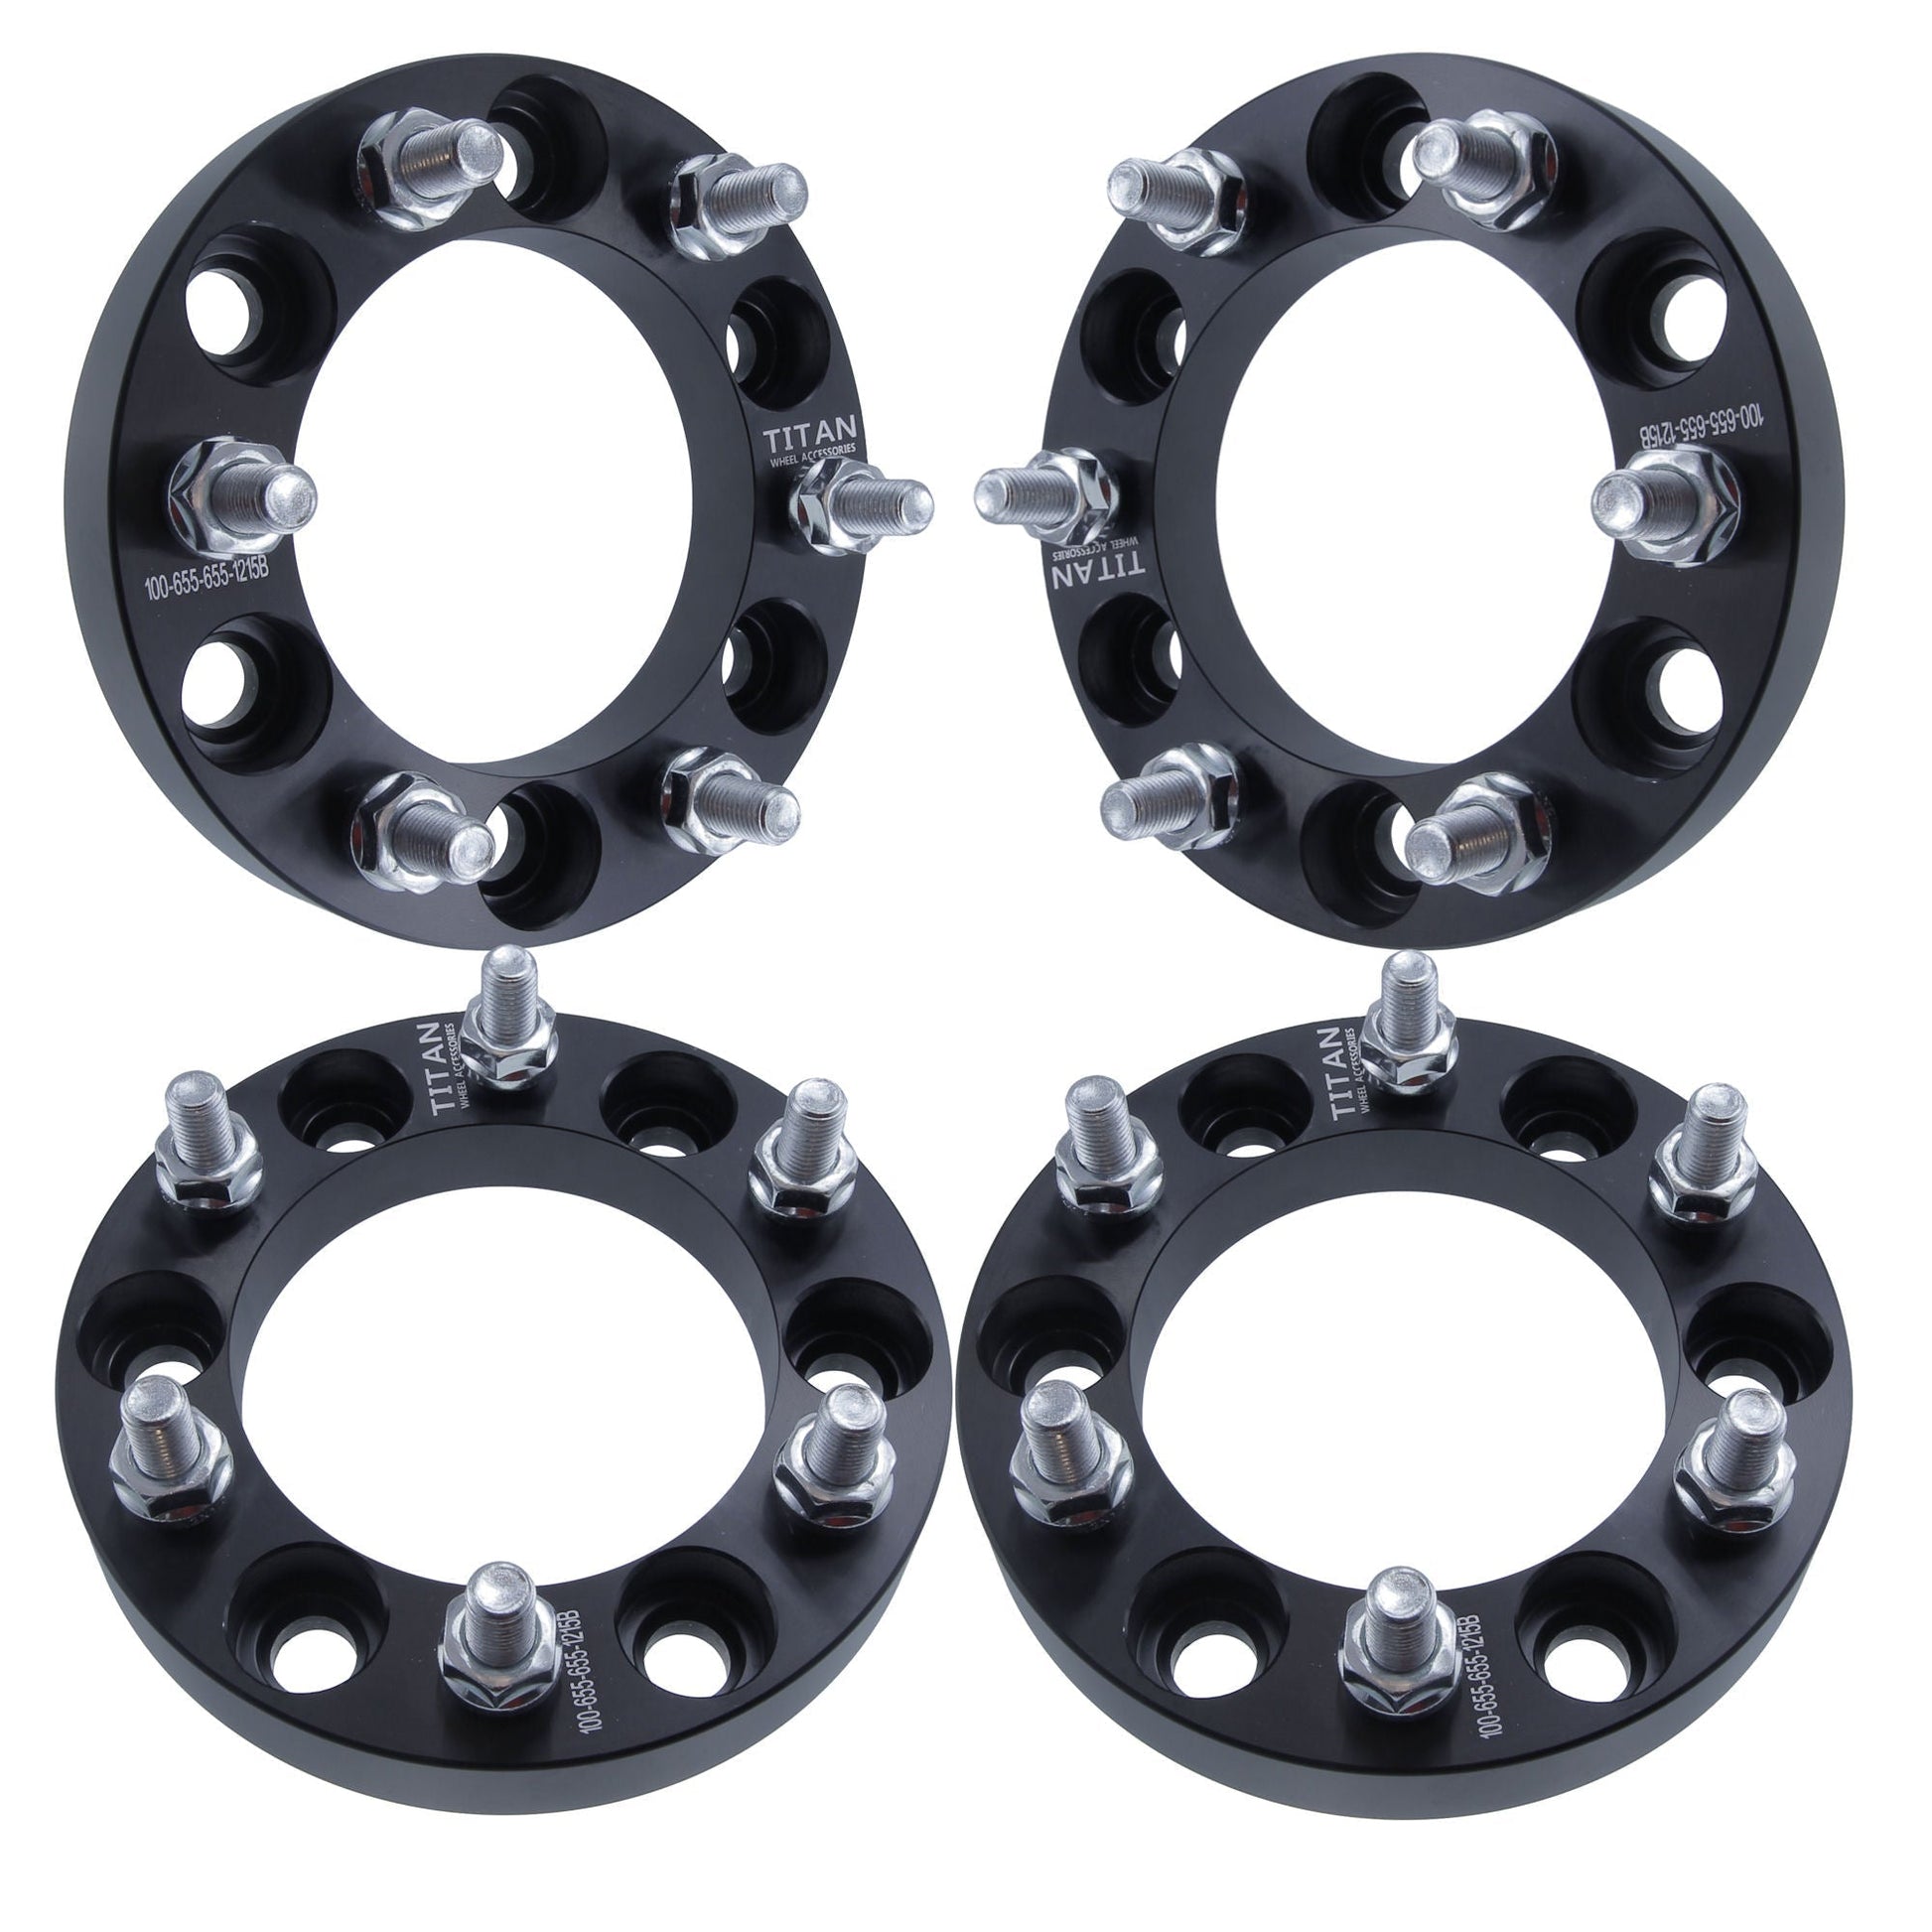 1" (25mm) Titan Wheel Spacers for Isuzu Rodeo Trooper Toyota 4 Runner FJ Cruiser | 6x5.5 (6x139.7) | 12x1.5 Studs | Set of 4 | Titan Wheel Accessories